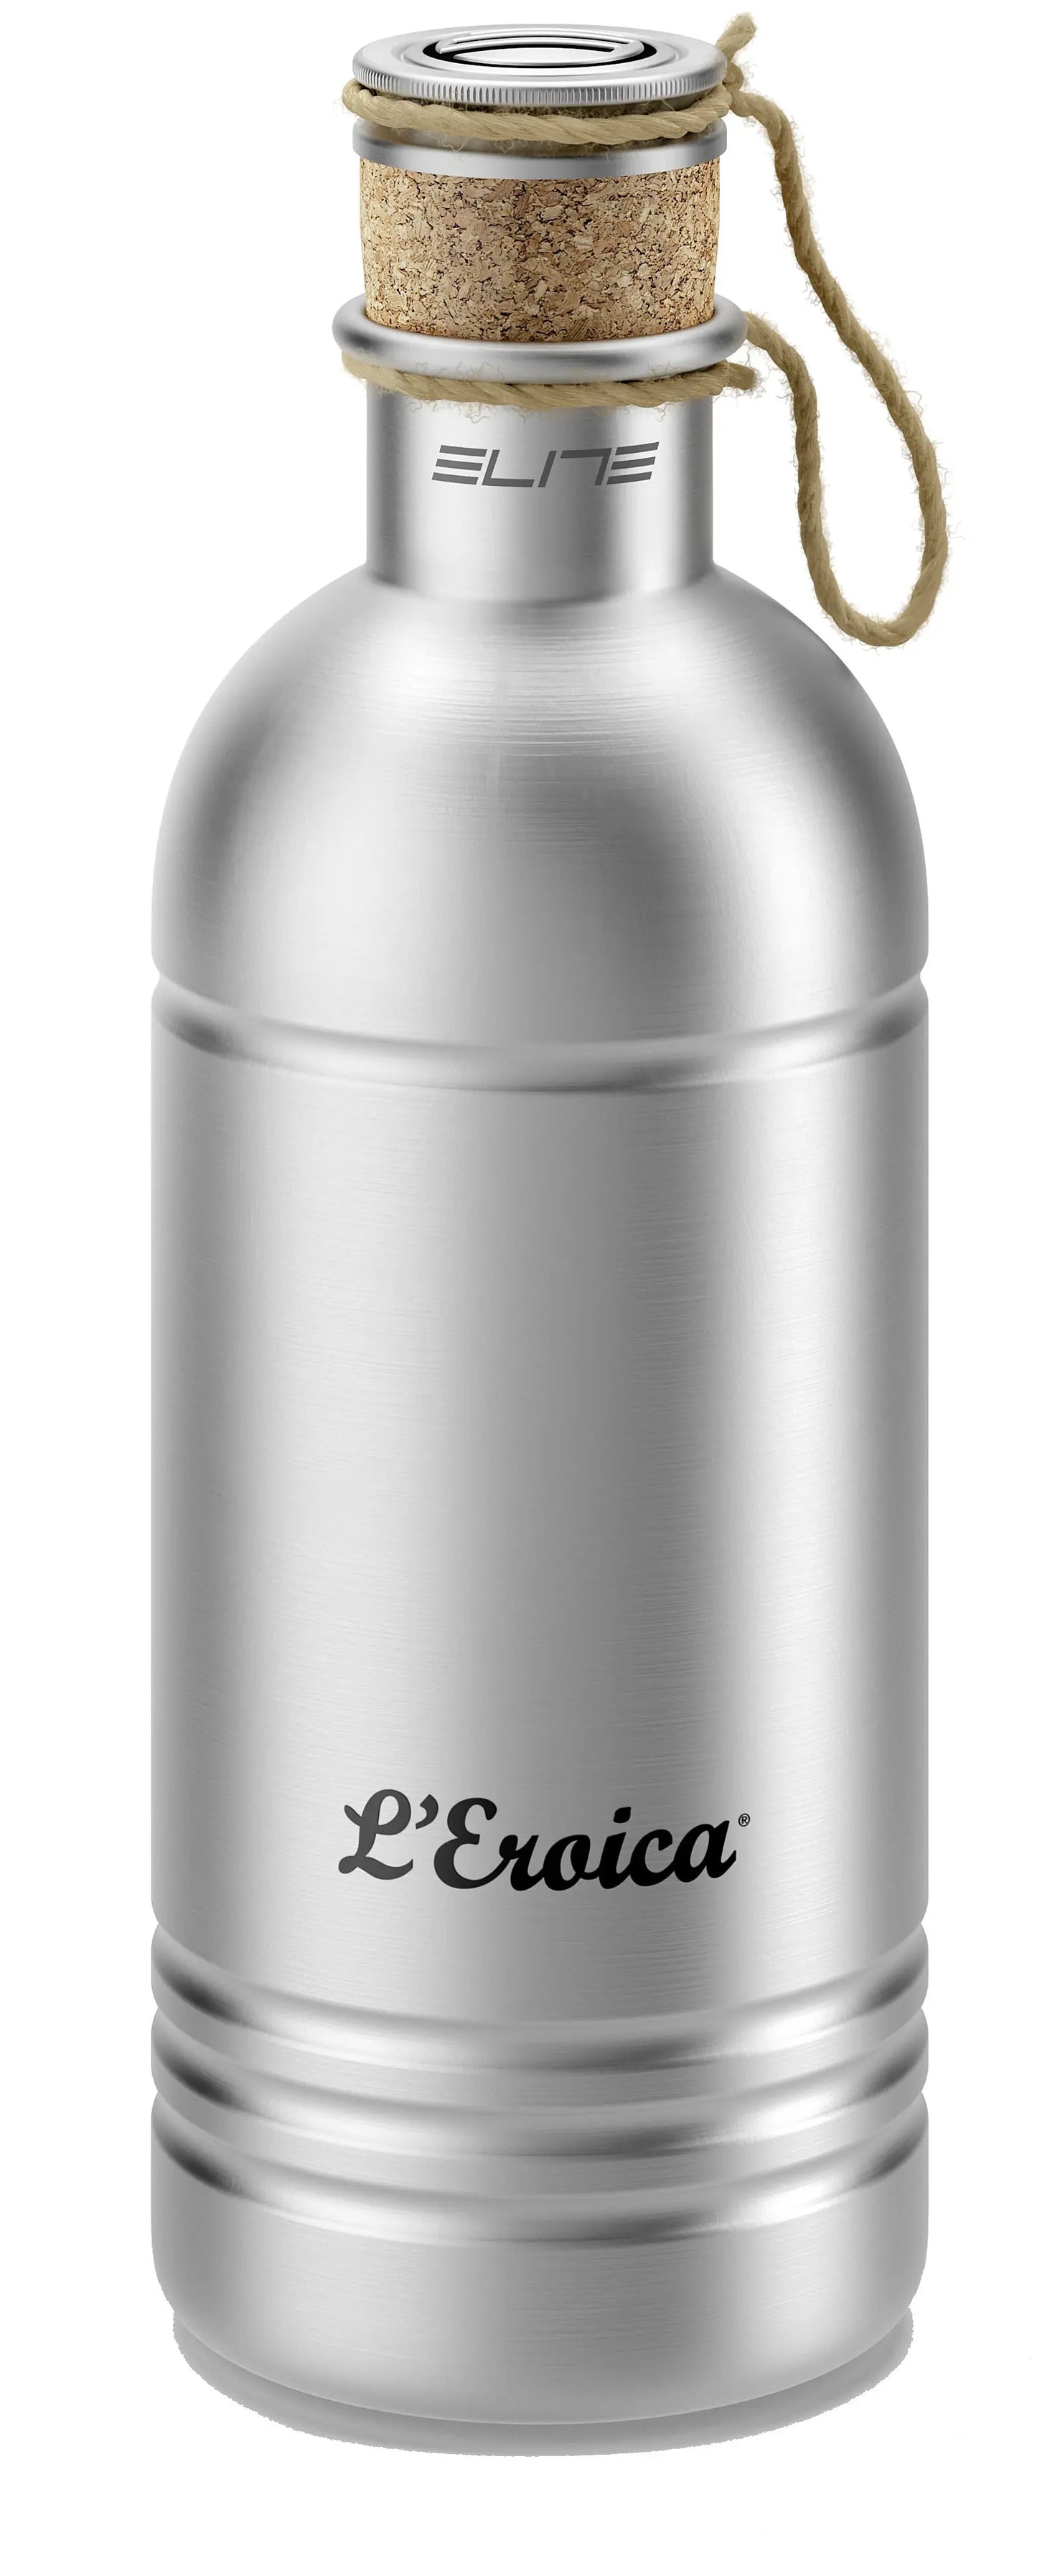 Eroica aluminium bottle with cork stopper 600 ml